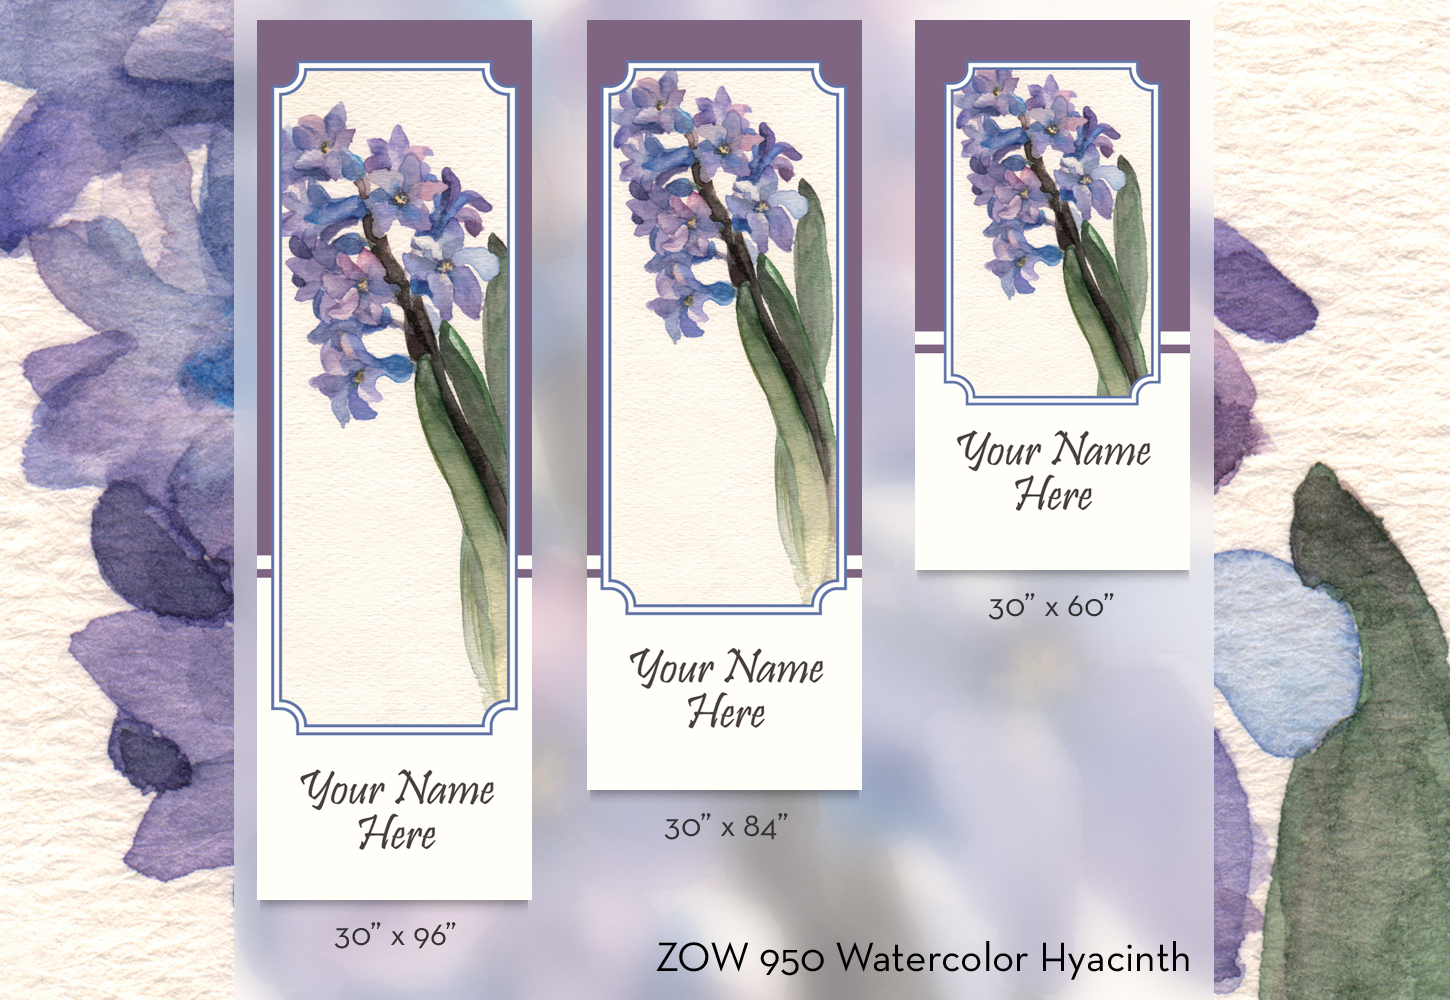 ZOW 950 Watercolor Hyacinth